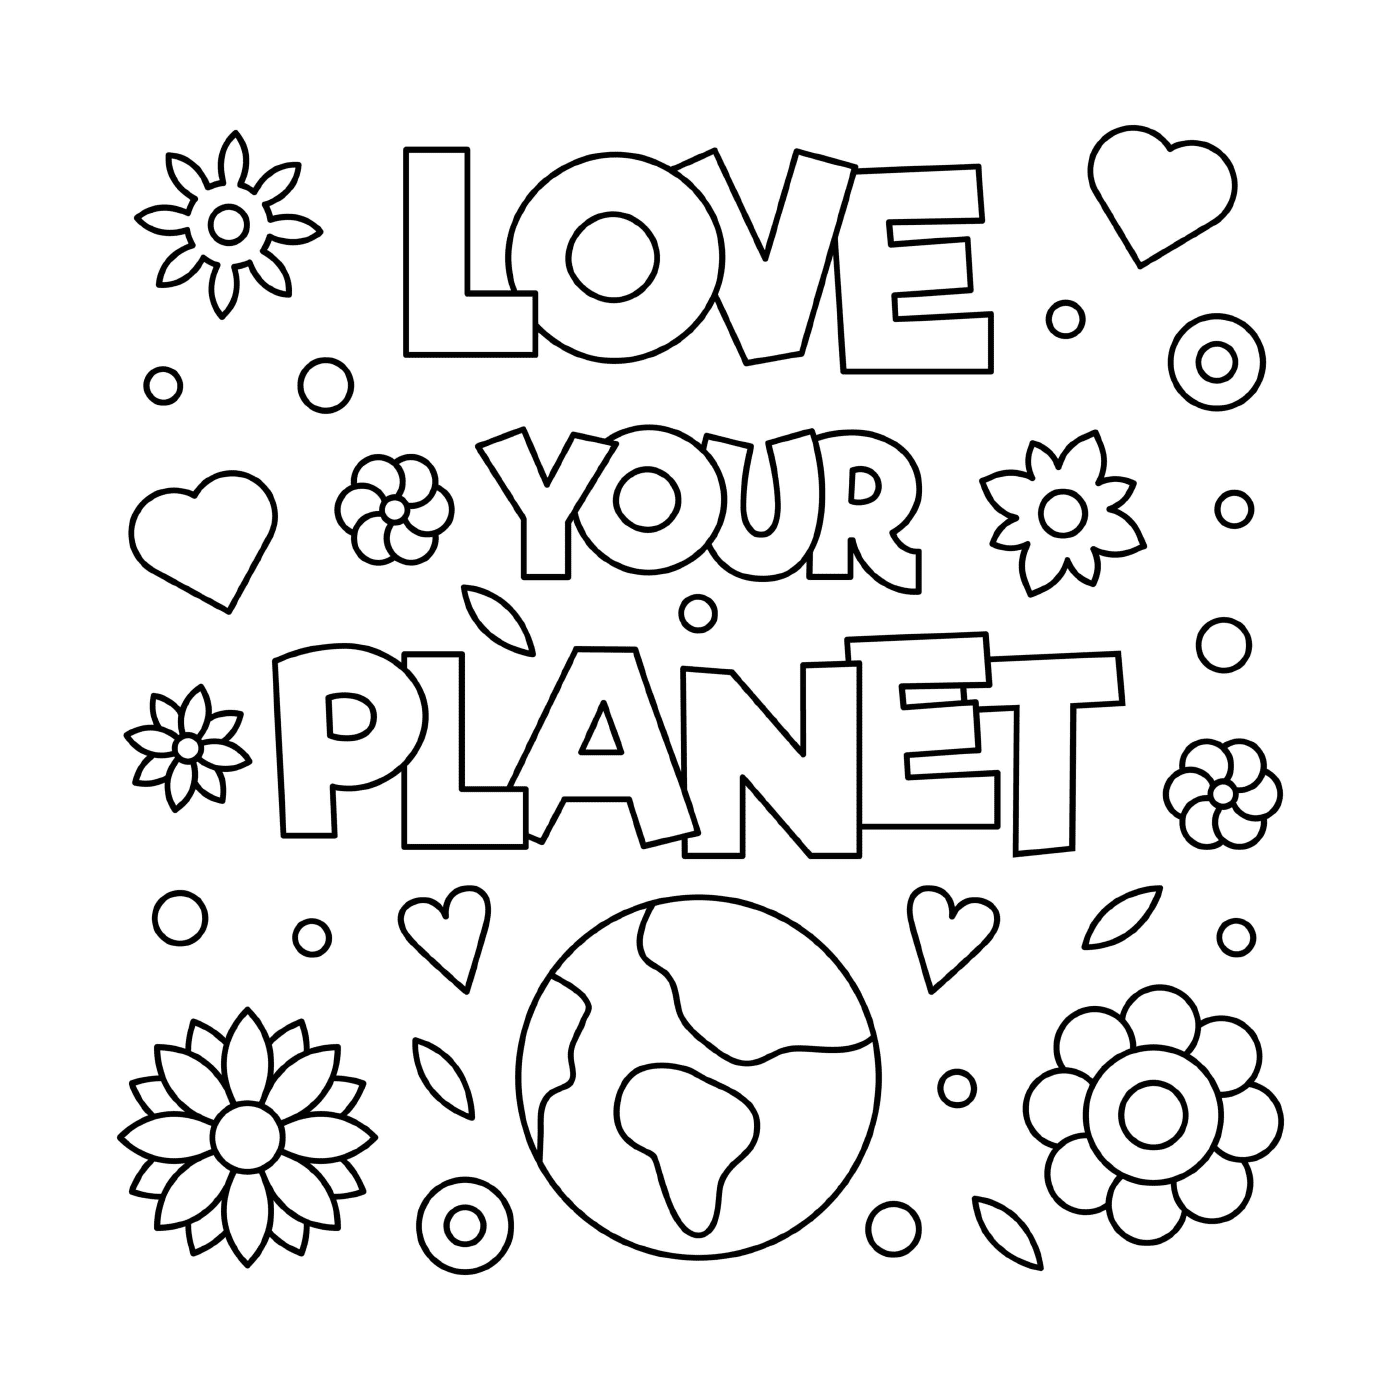  Люби свою планету к Дню Земли 